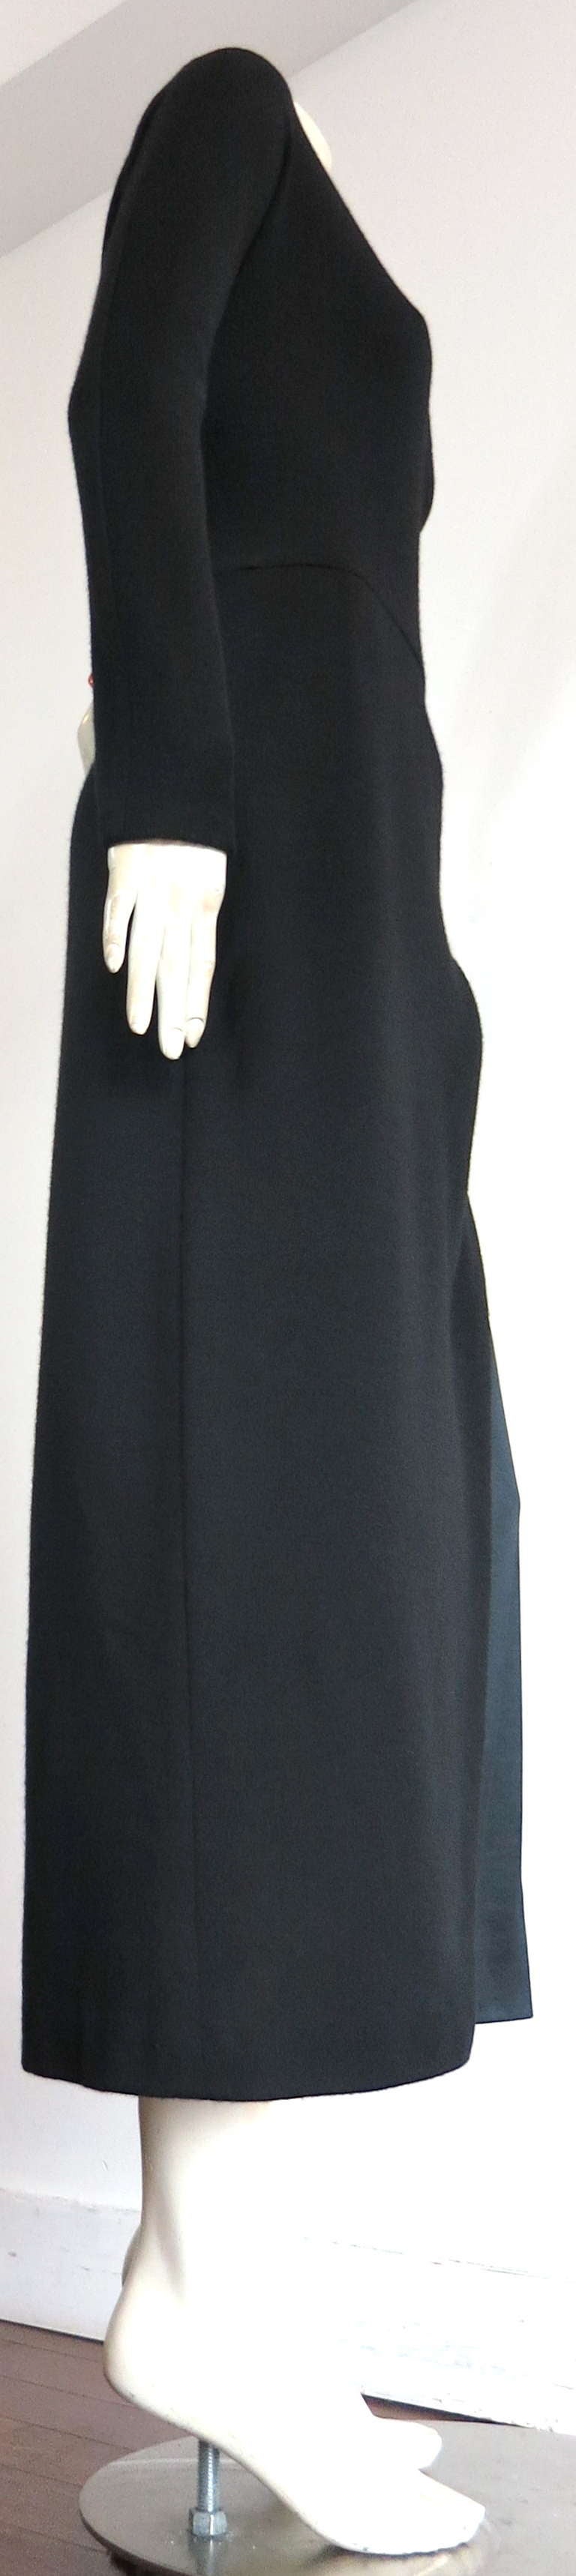 Women's Vintage GEOFFREY BEENE One shoulder jersey & satin dress For Sale